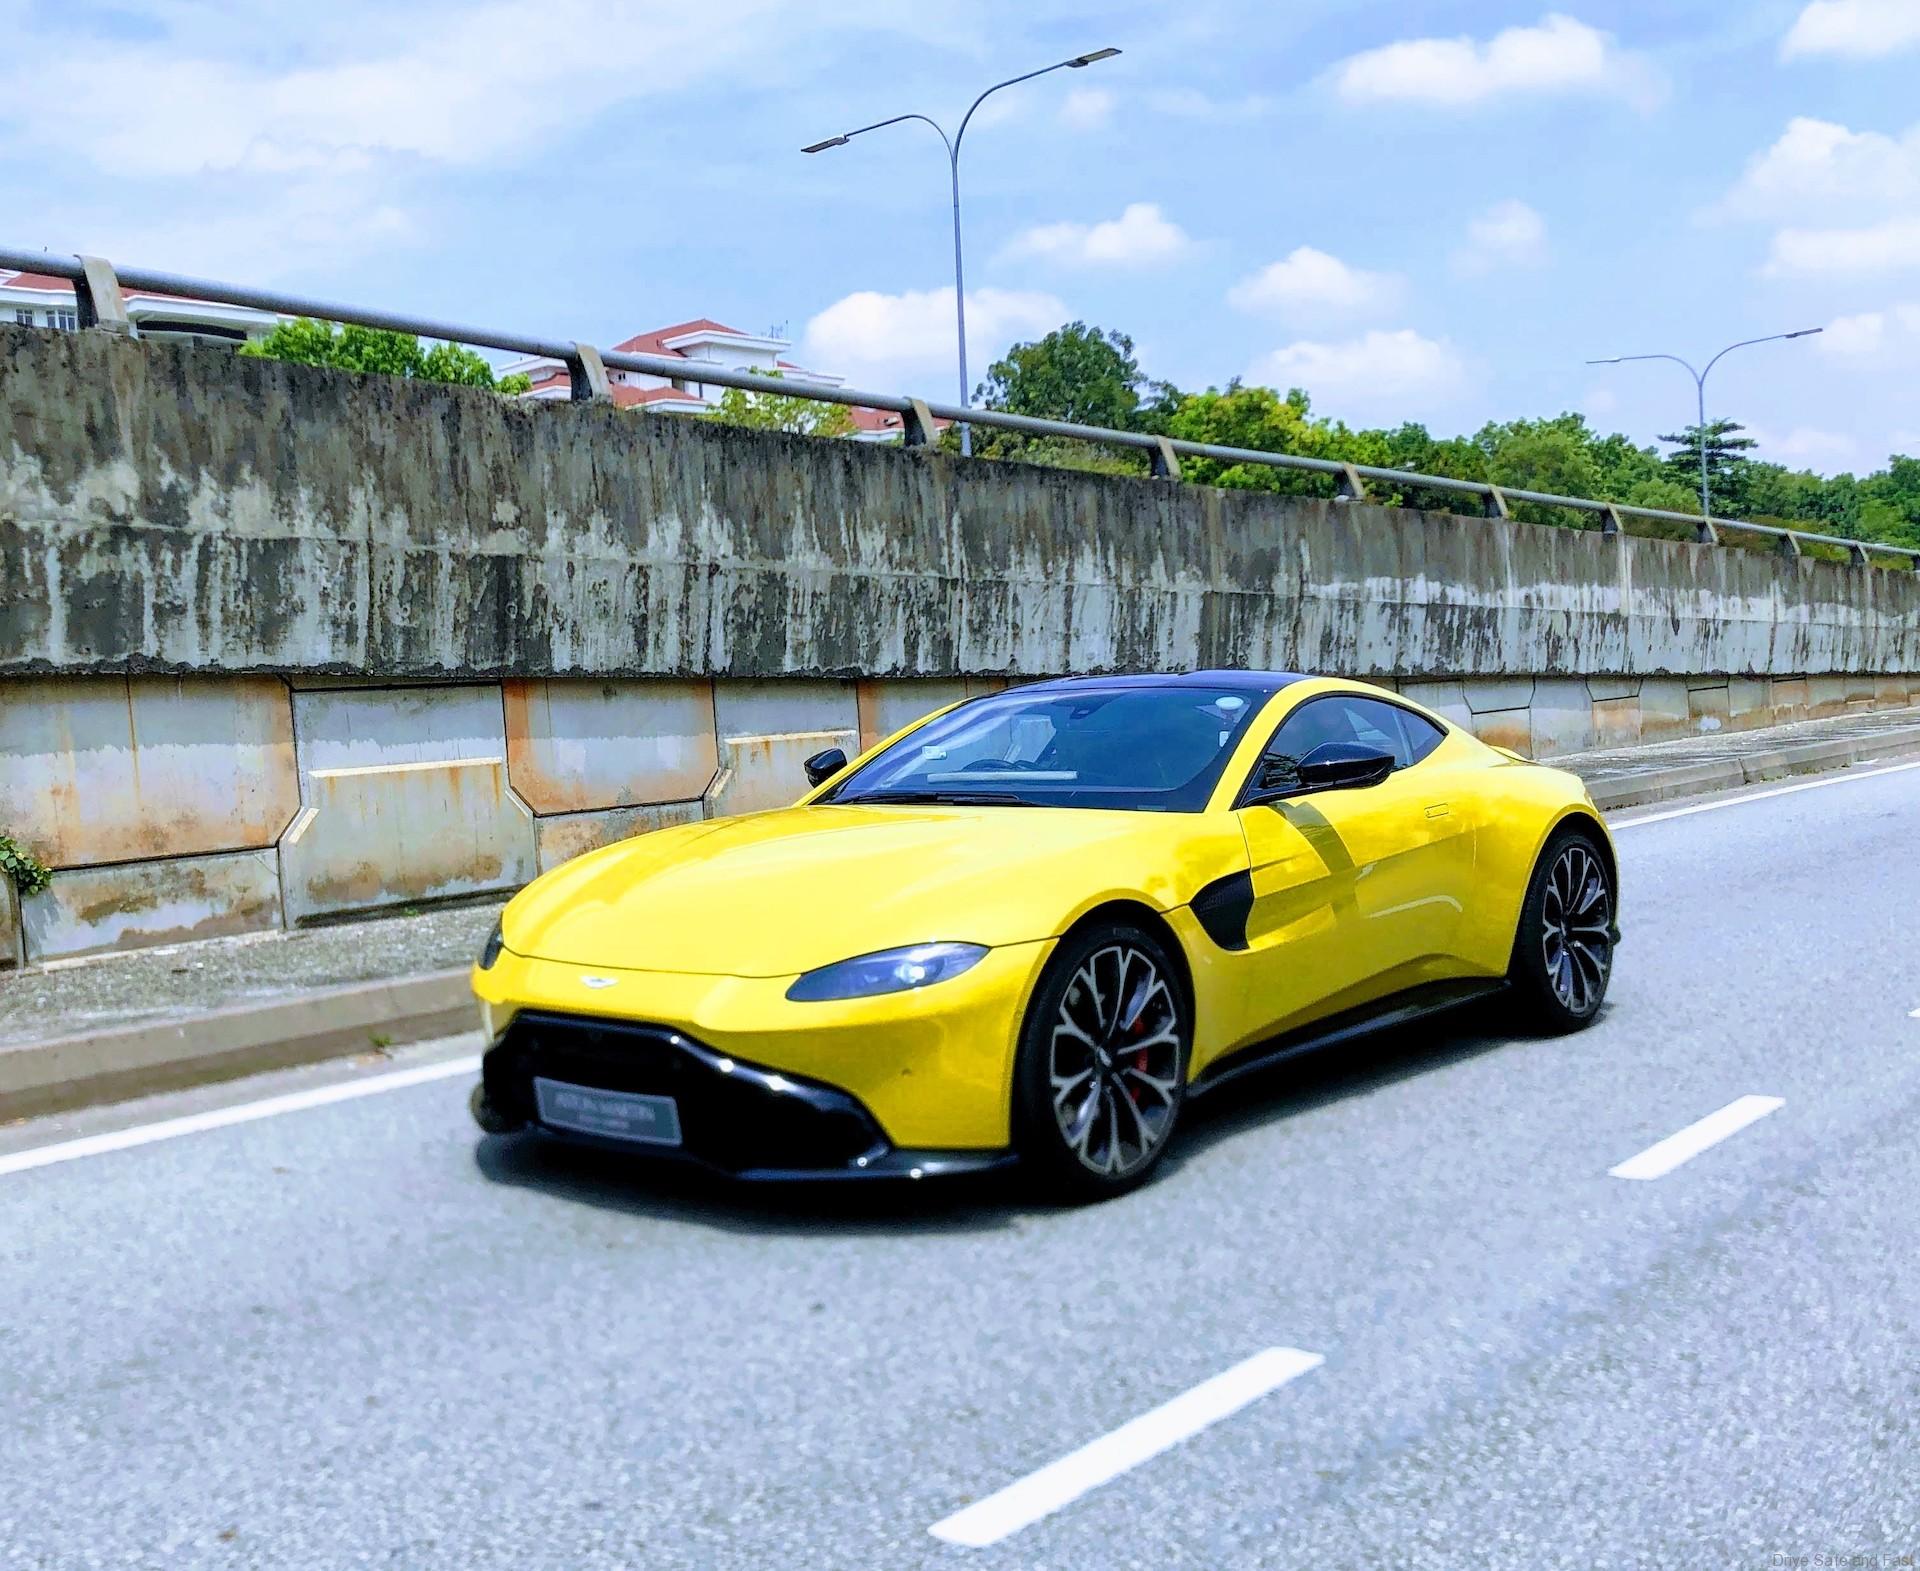 Aston martin malaysia